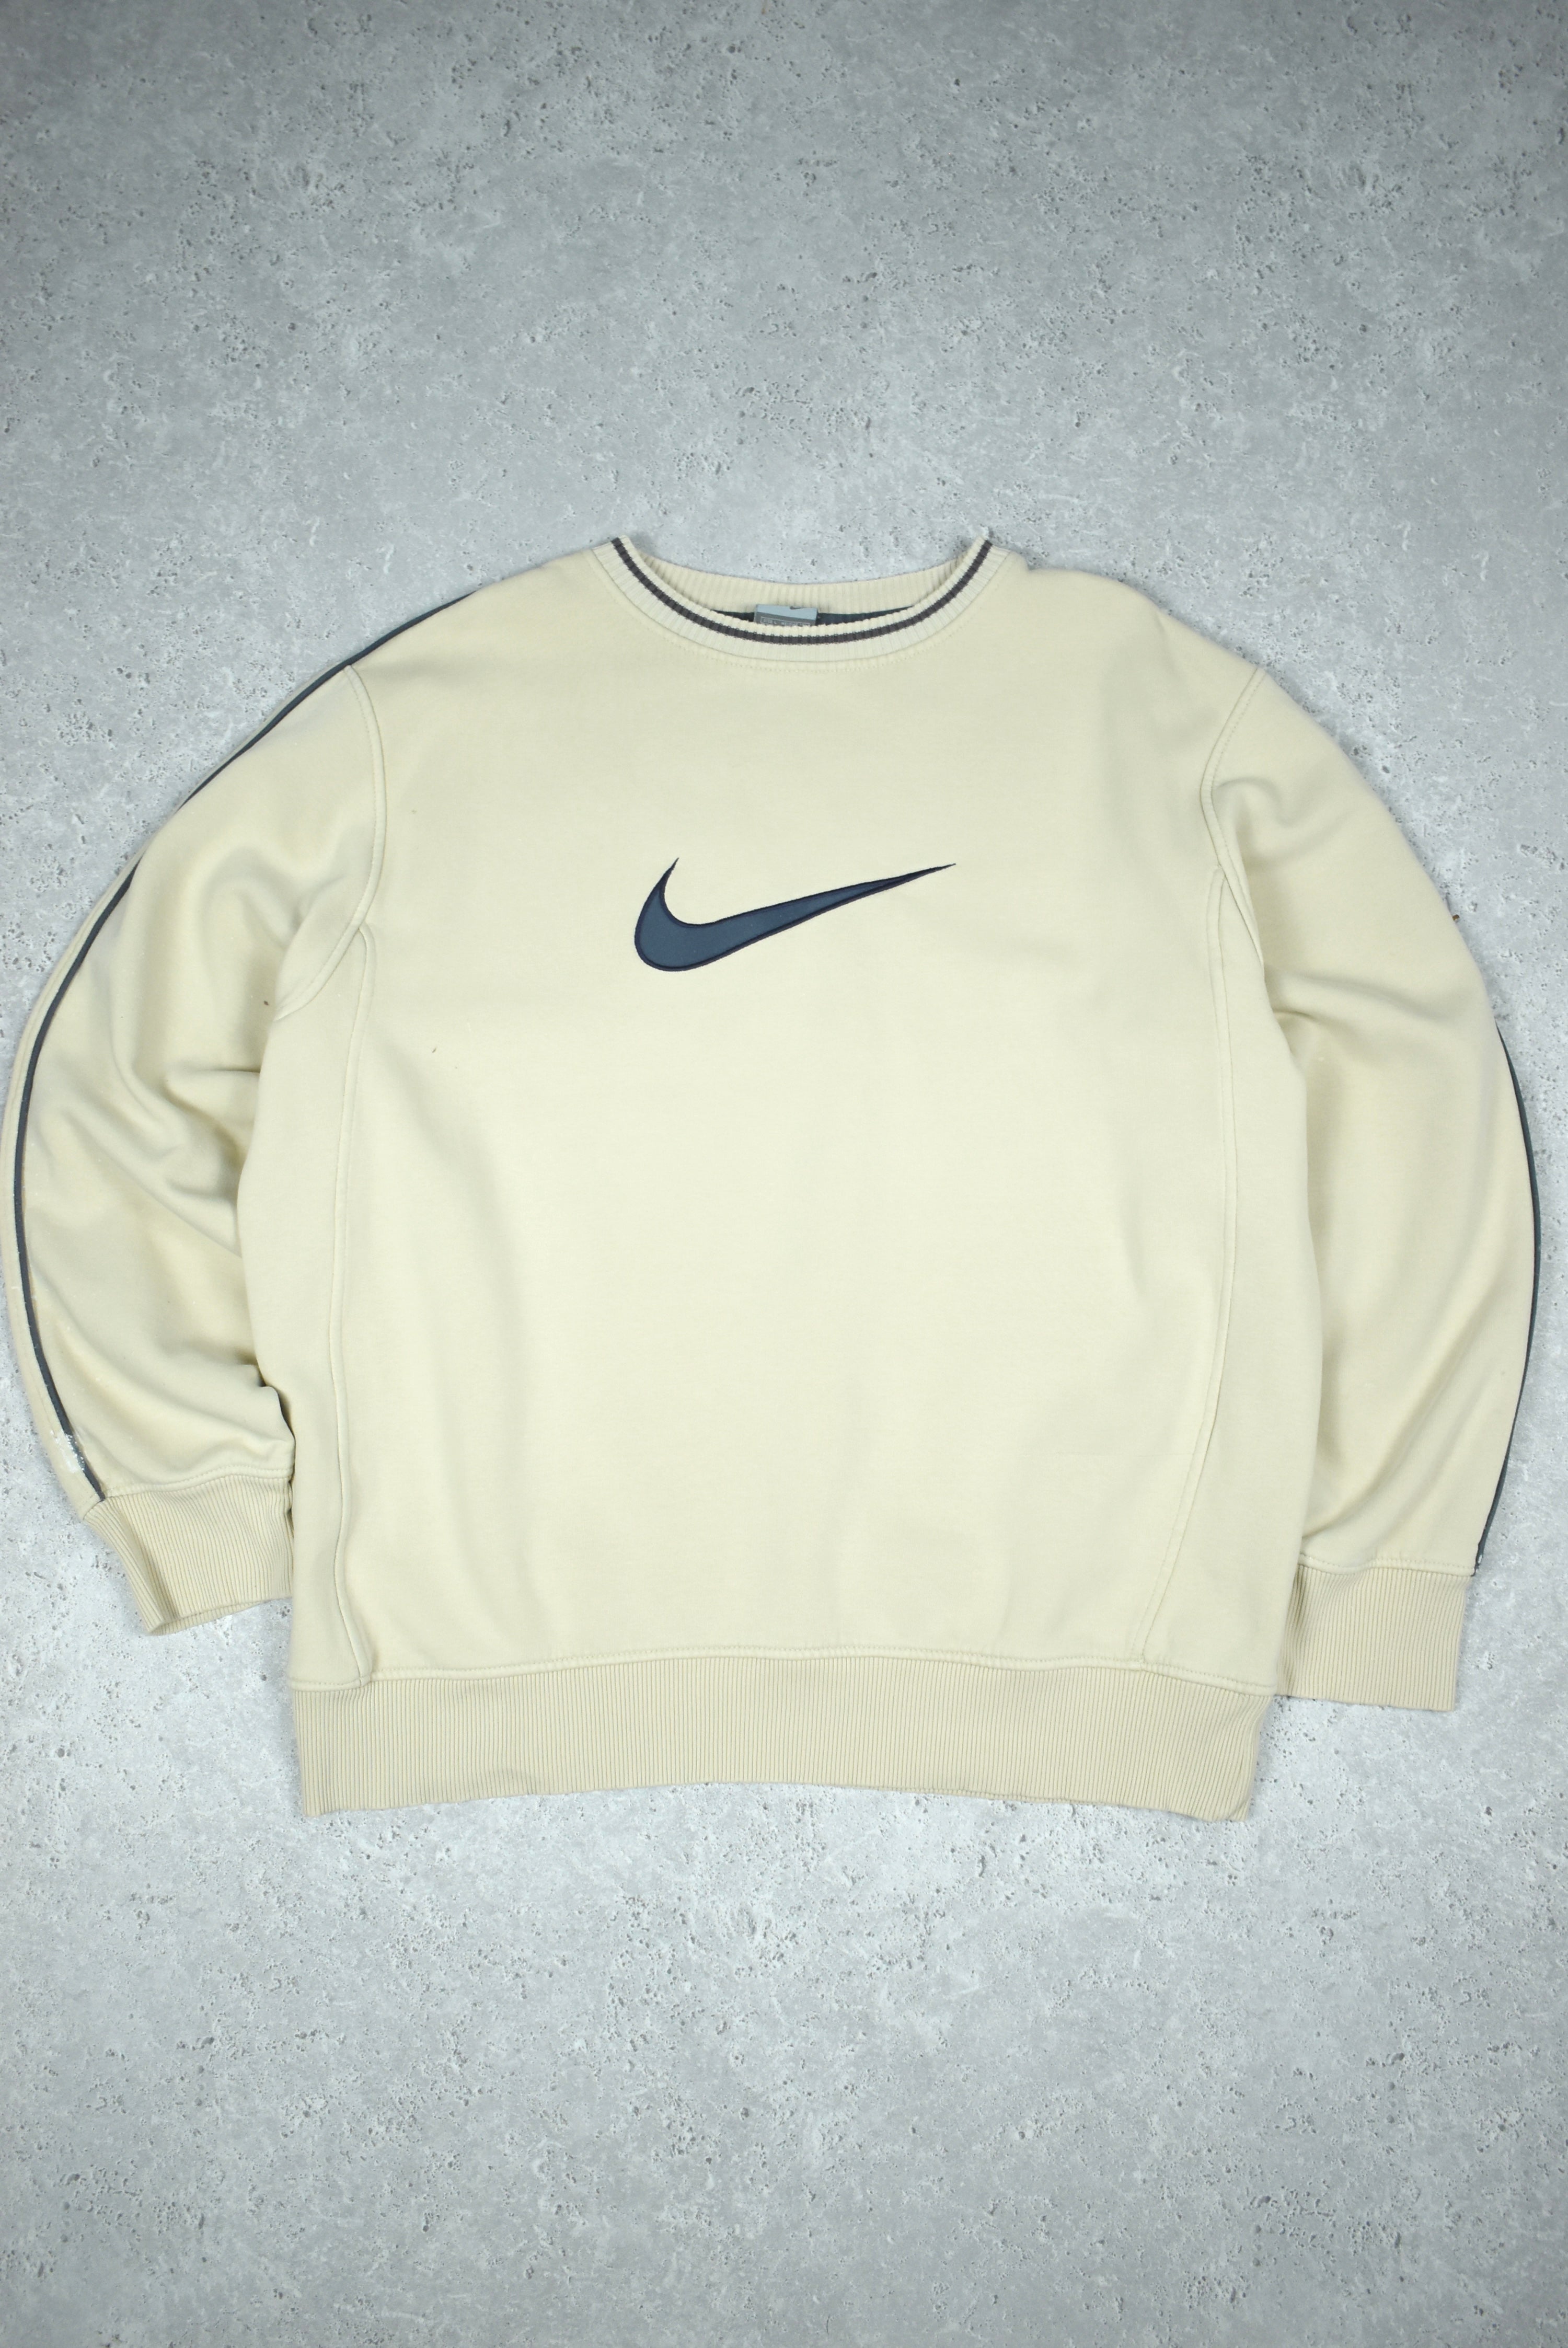 Vintage Nike Embroidery Swoosh Sweatshirt Large